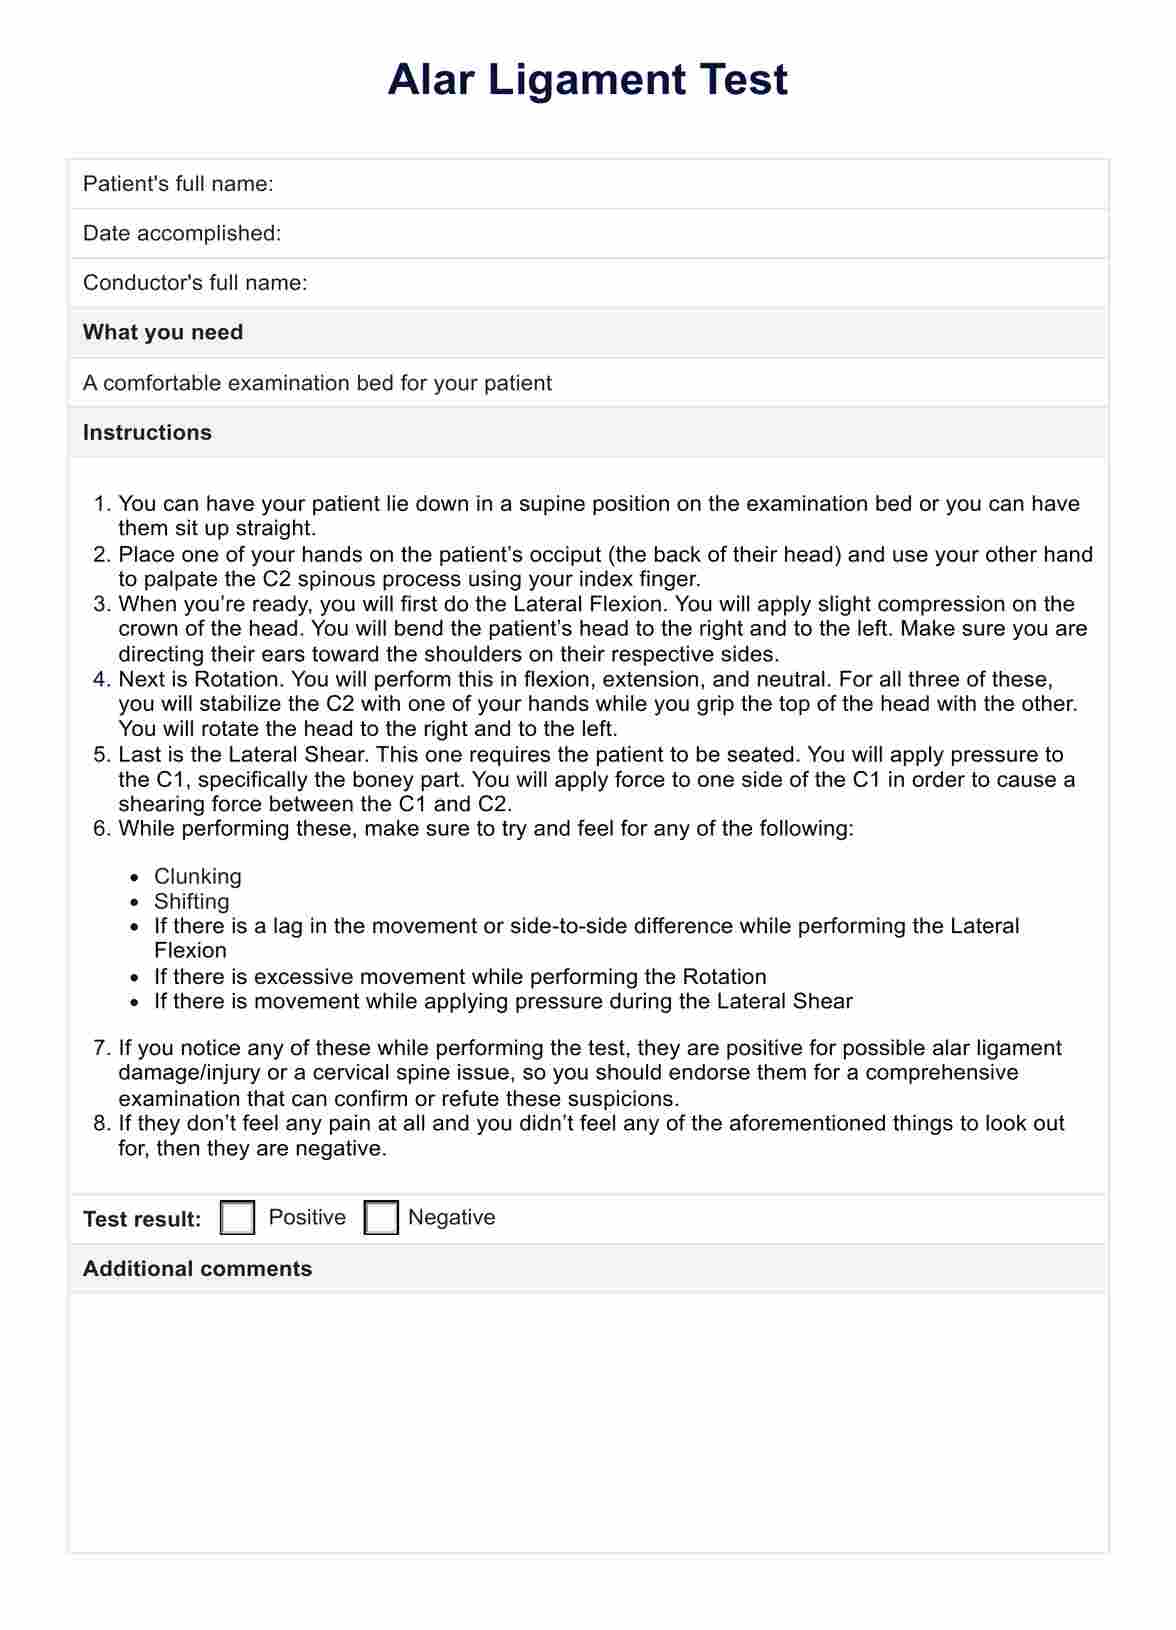 Alar Ligament Test PDF Example